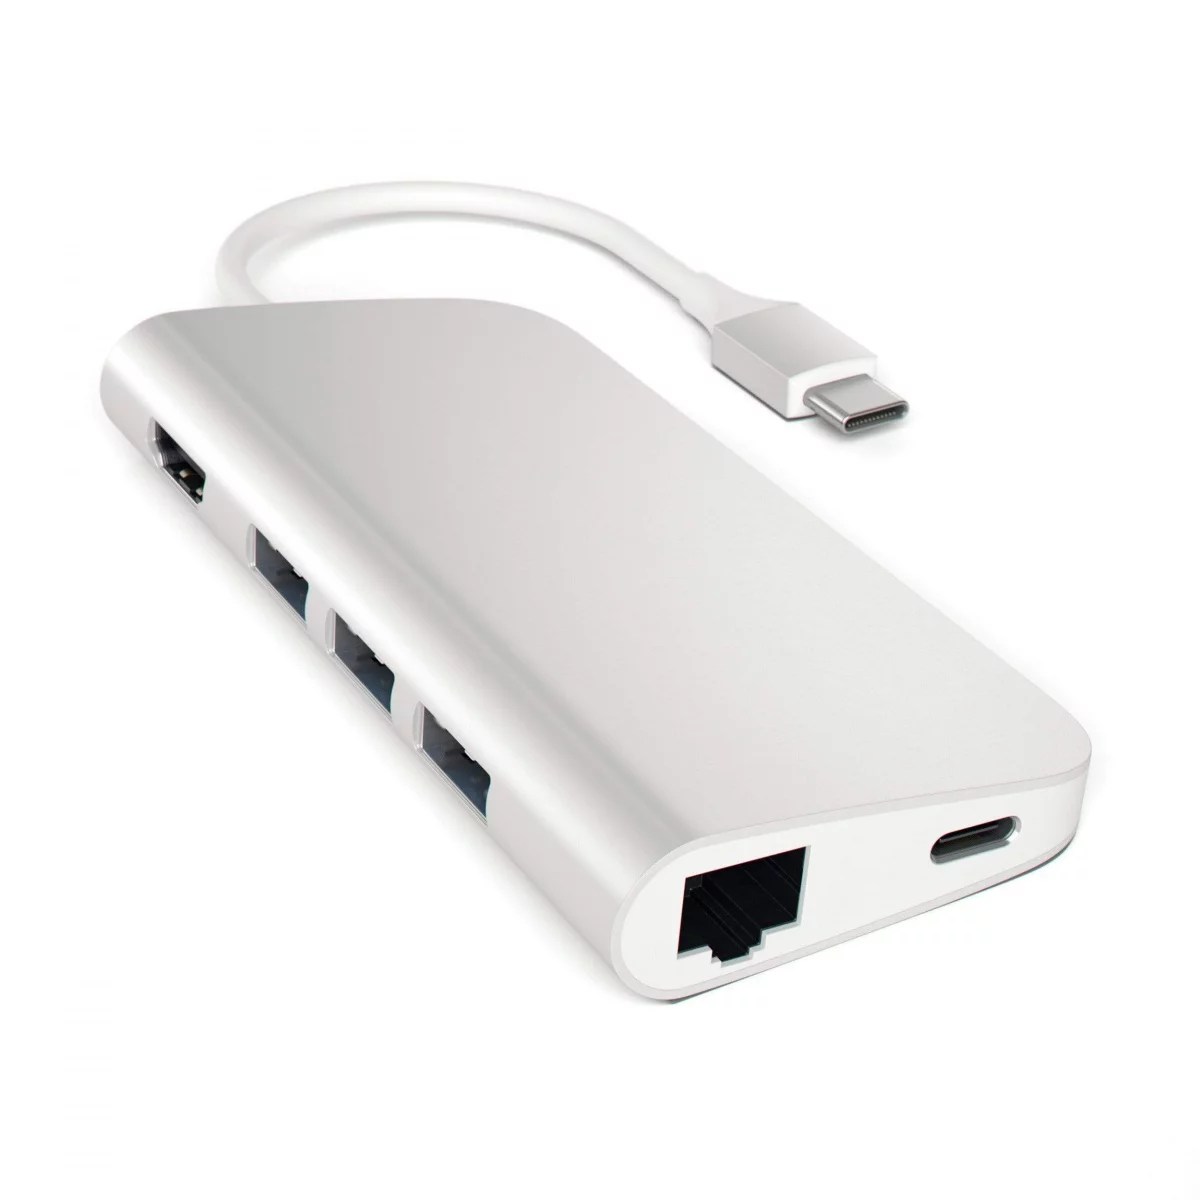 Переходник Satechi Aluminum. Порты: USB Type-C, 3хUSB 3.0, 4K HDMI, Ethernet RJ-45, SD / micro-SD Серебристый